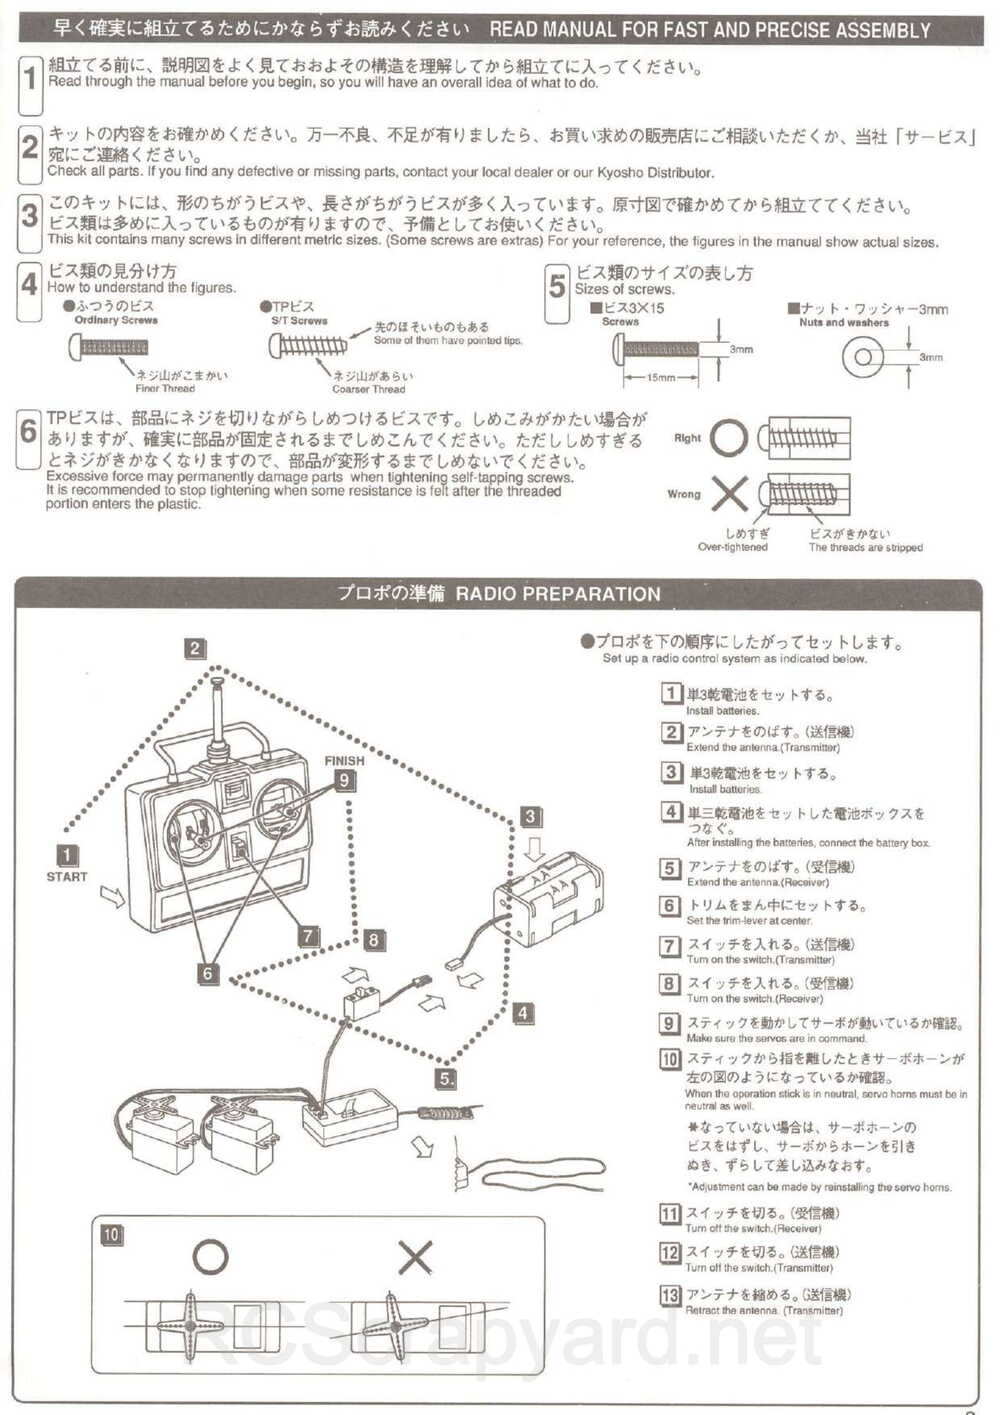 Kyosho - 31345 - Inferno 10 - Manual - Page 03